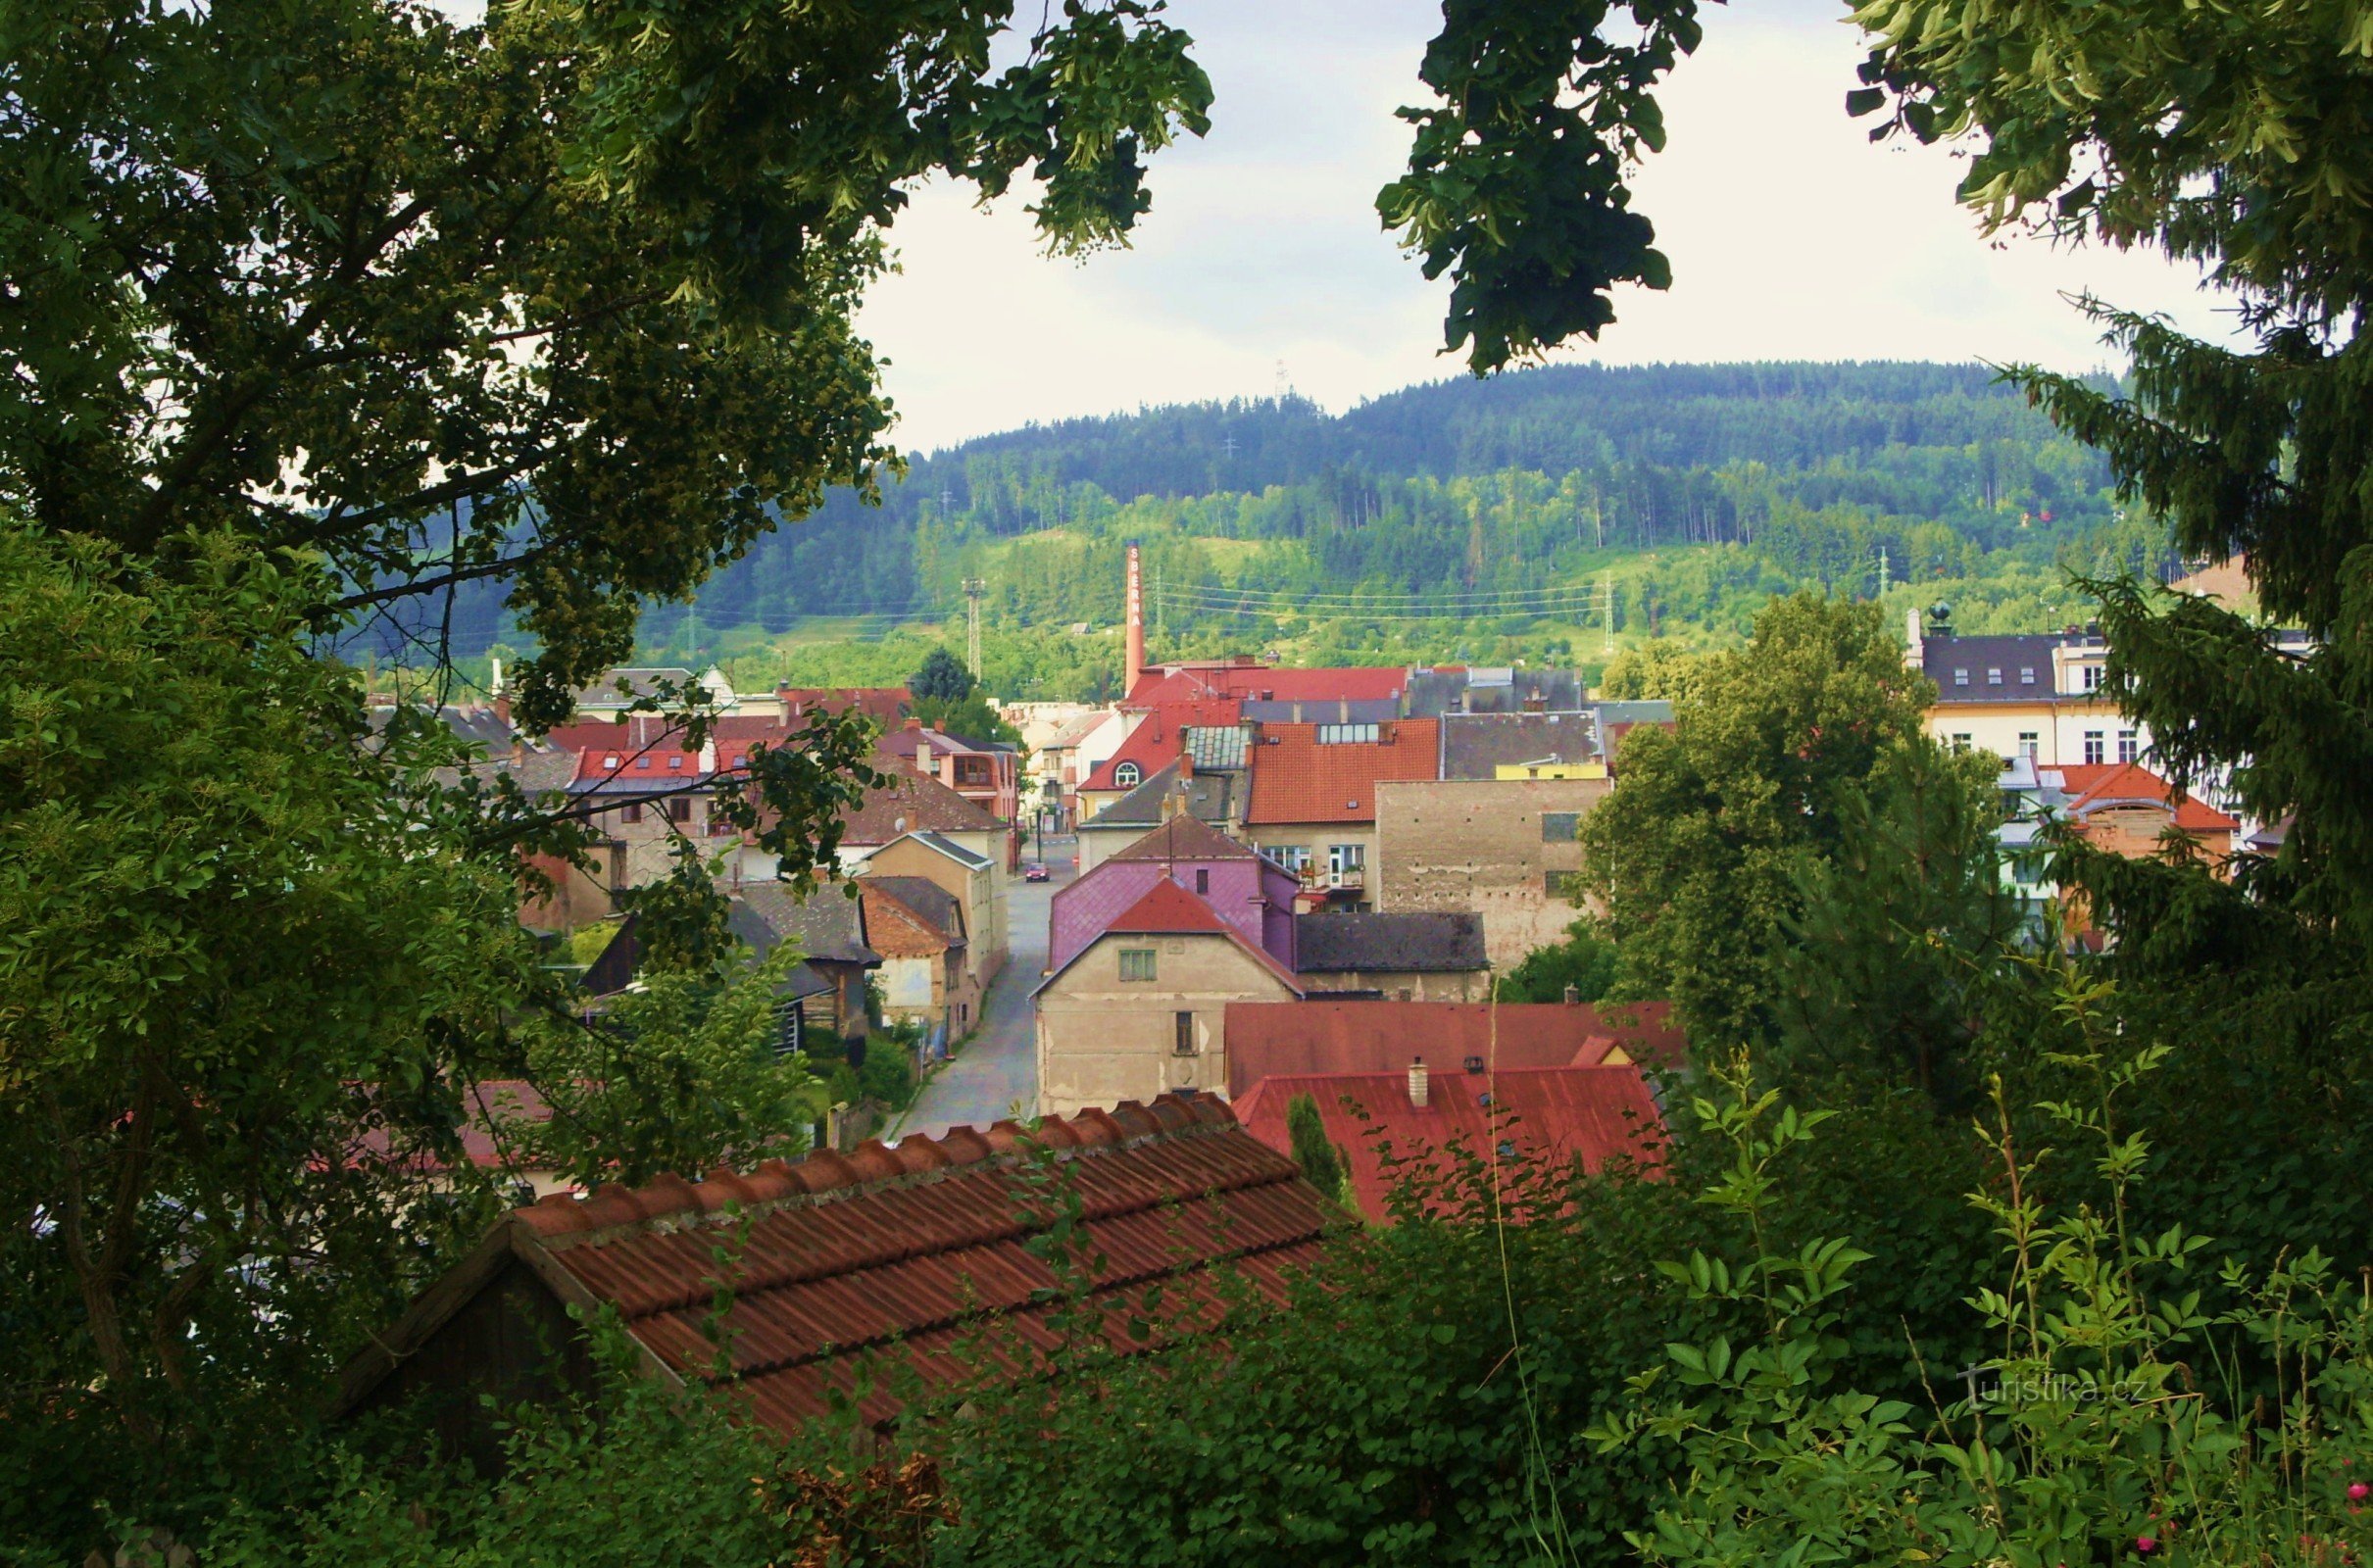 Đến thị trấn Česká Třebová